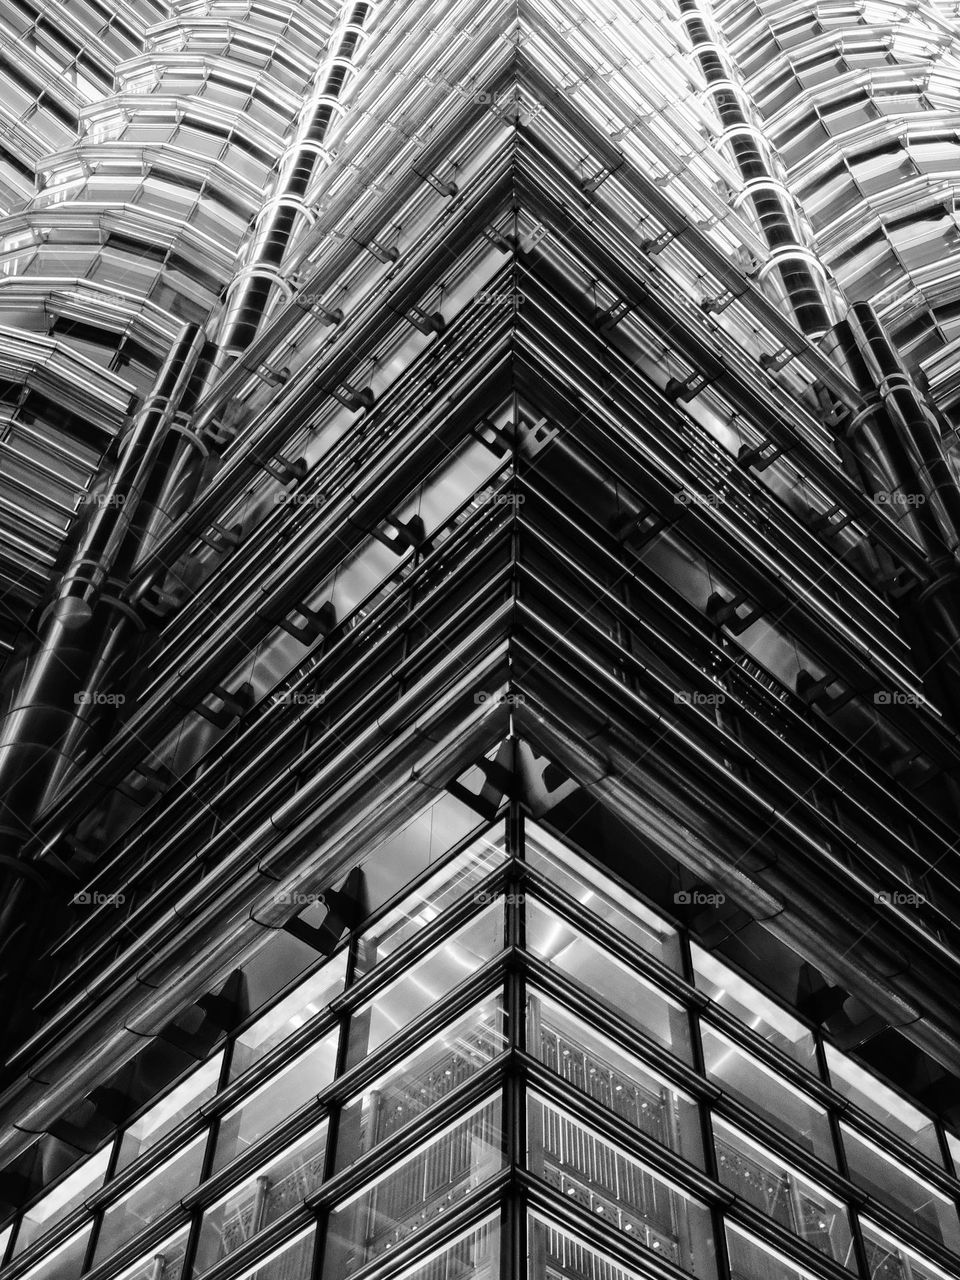 Petronas towers steel facade